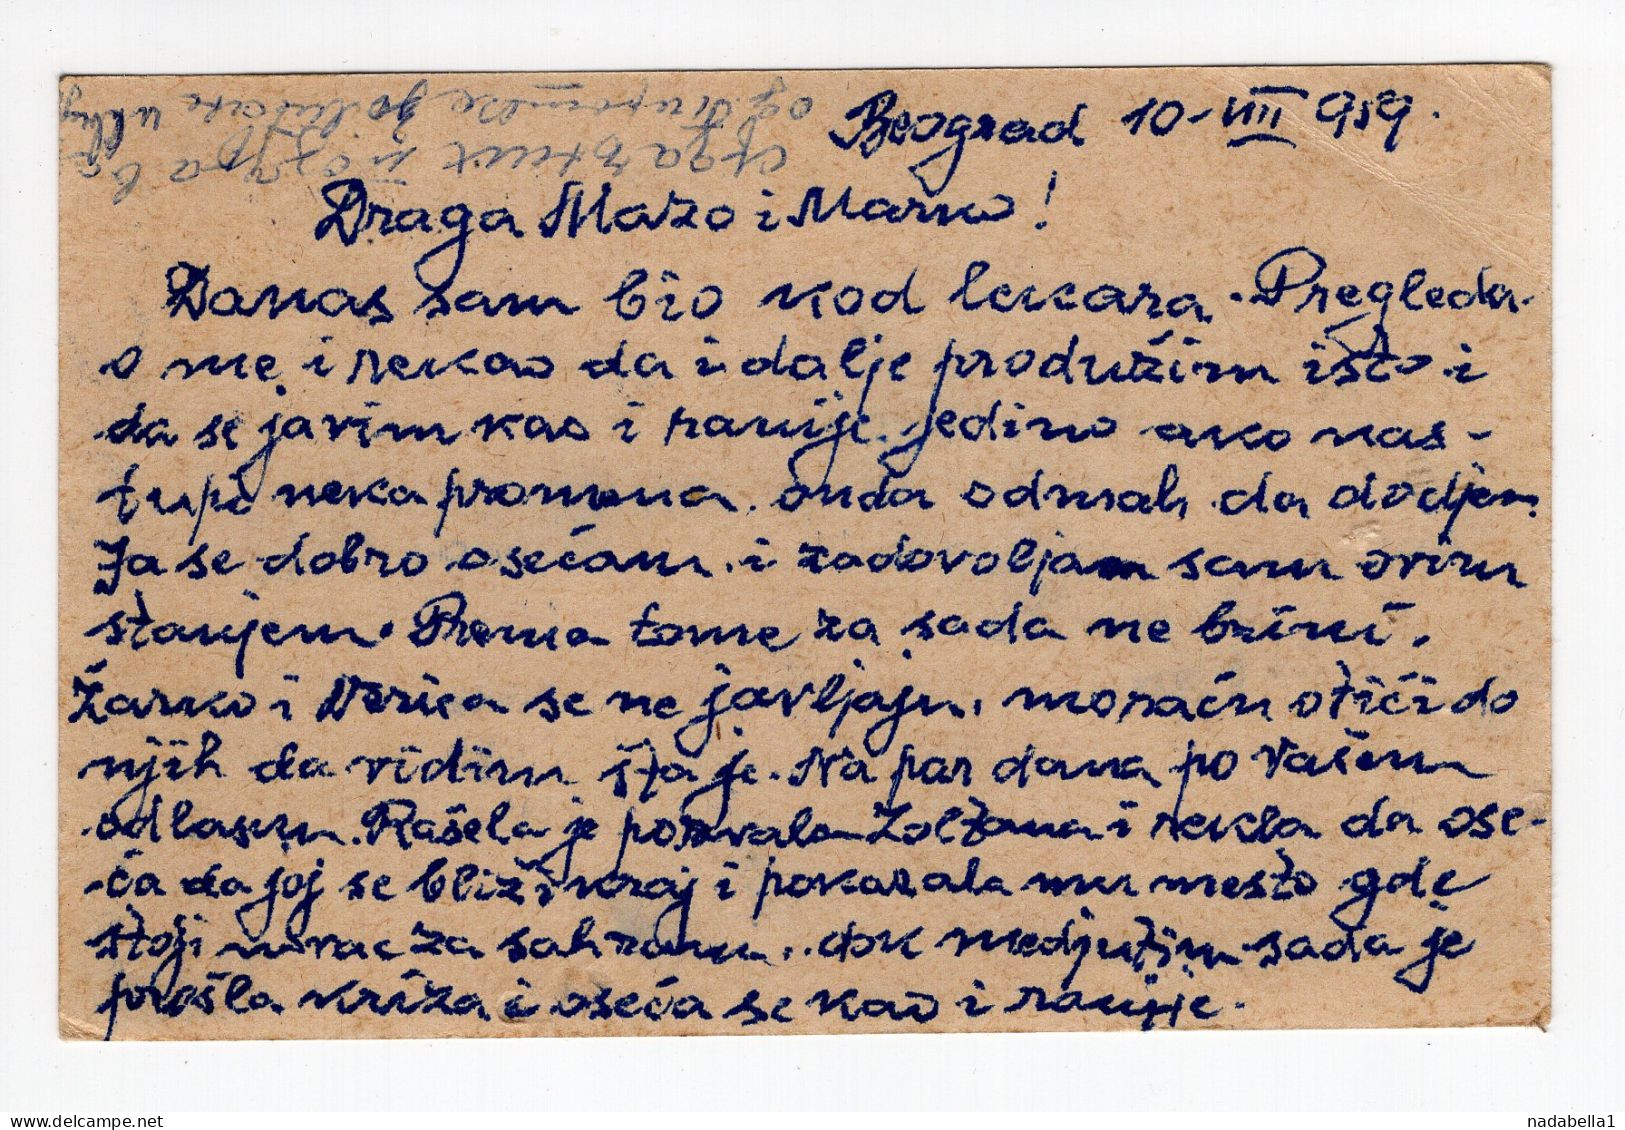 1959. YUGOSLAVIA,SERBIA,BELGRADE,STATIONERY CARD,USED - Enteros Postales